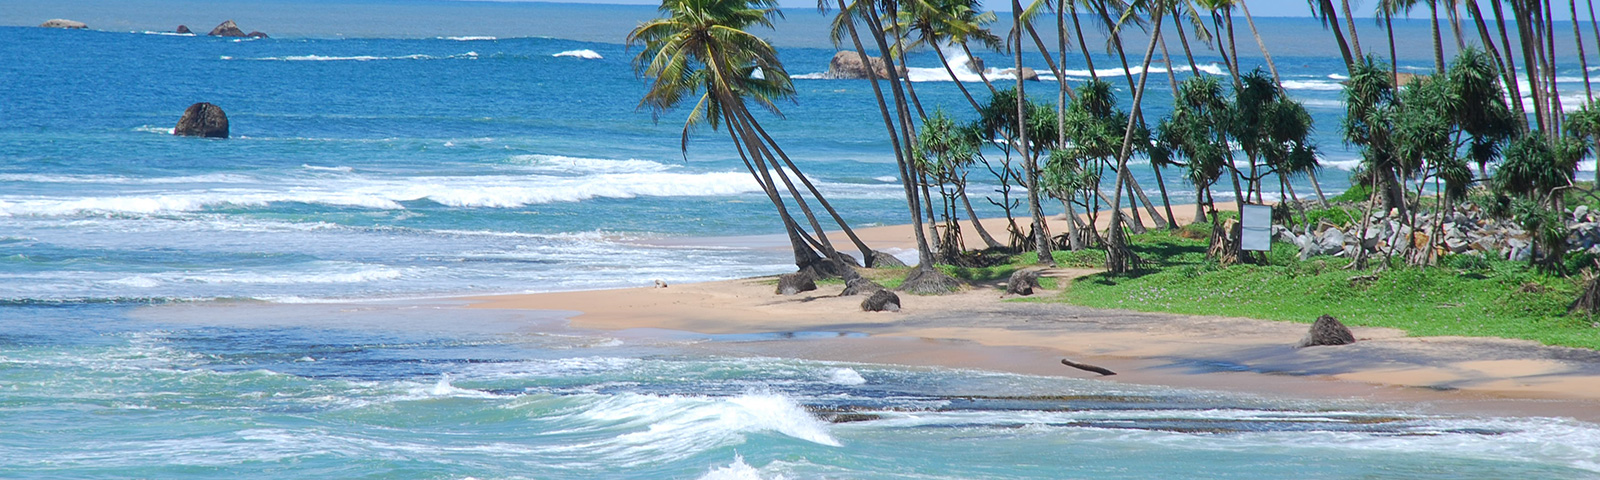 Beach Holiday in Sri Lanka